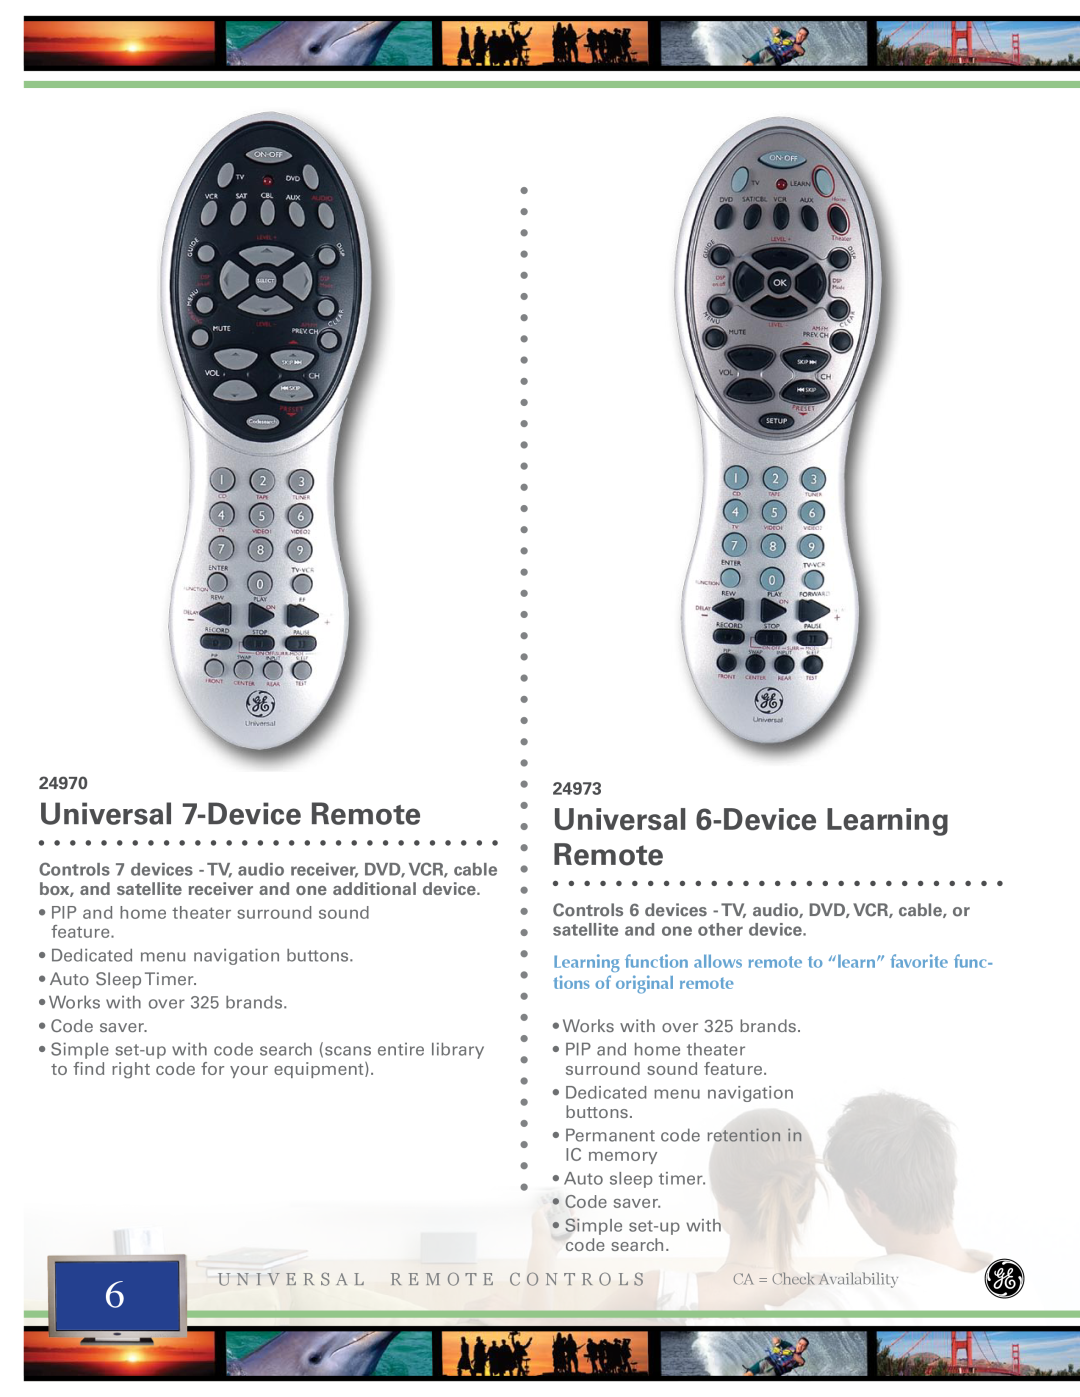 Jasco 24993 Universal 7-Device Remote, Universal 6-Device Learning Remote, 24970, U N I V E R S A L R E M O T E, 24973 